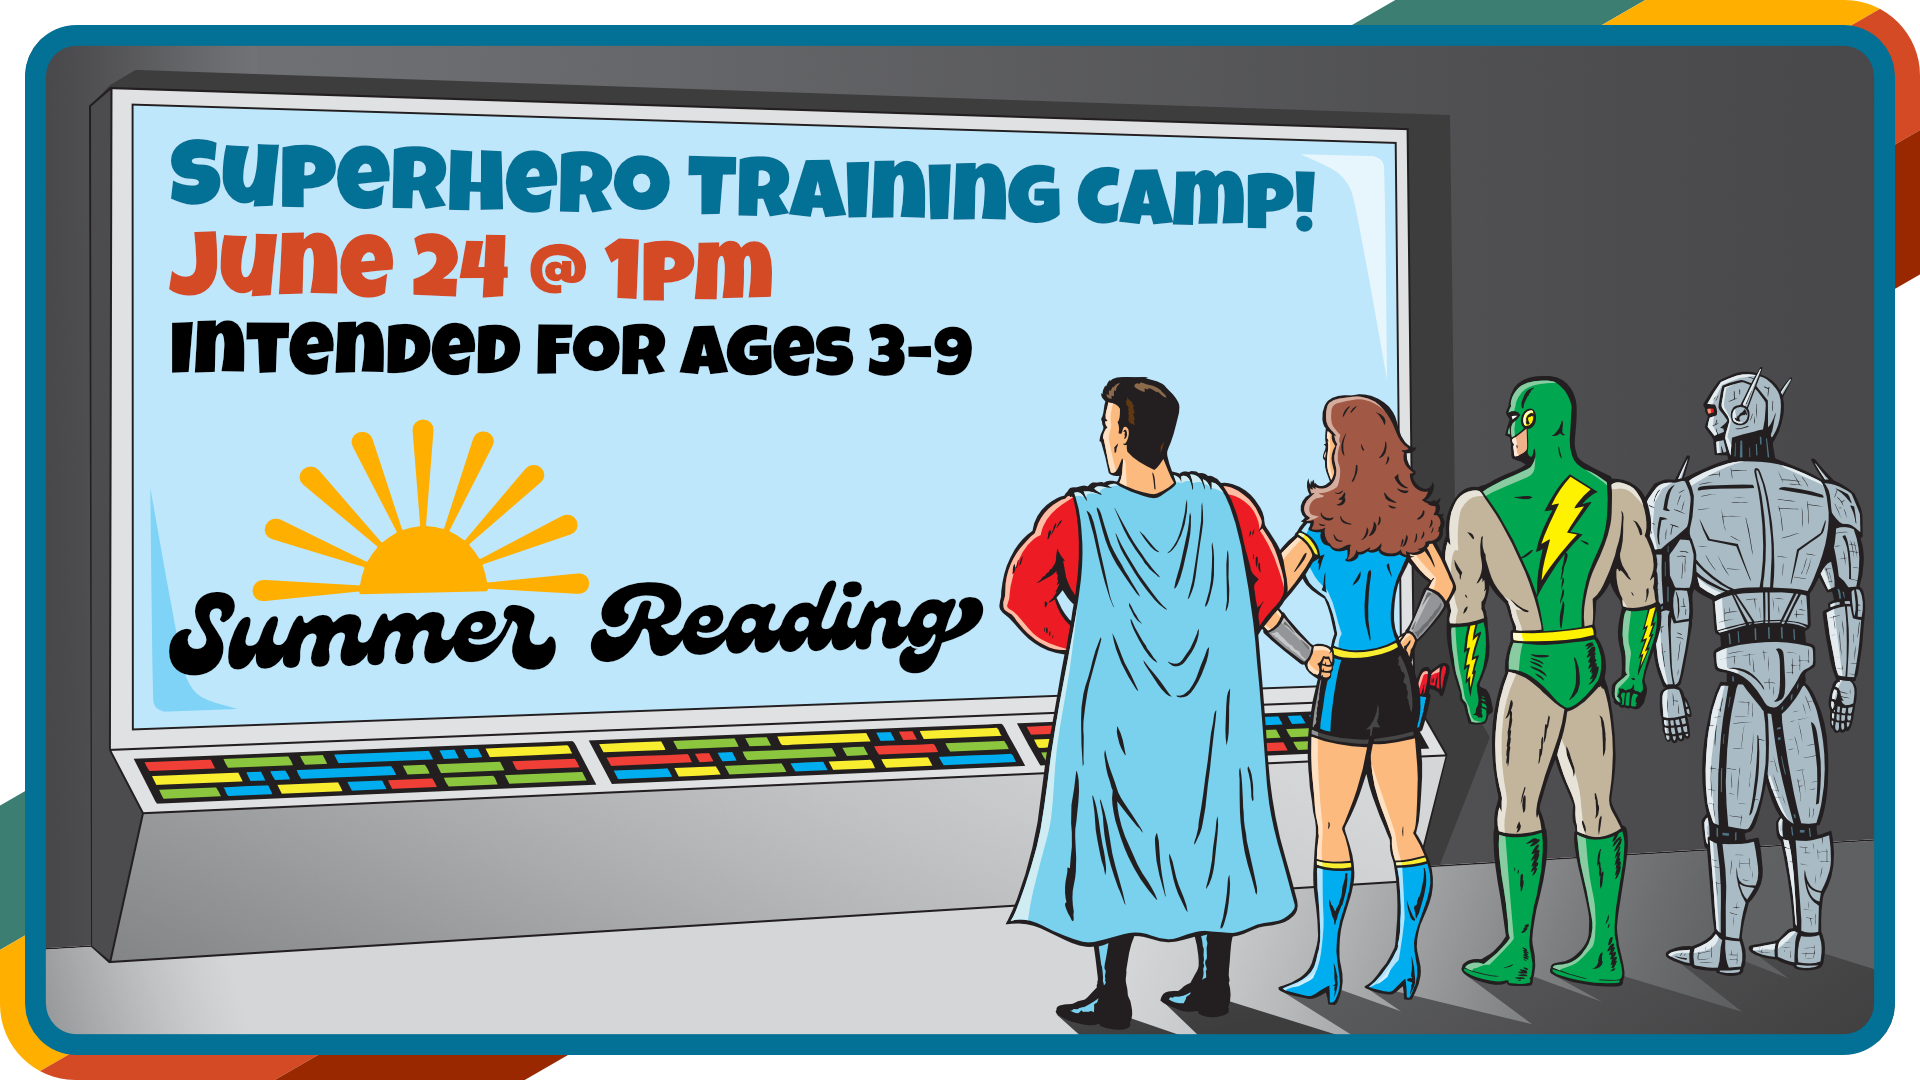 Summer Reading Superhero Training Camp Rowan County Public Library 